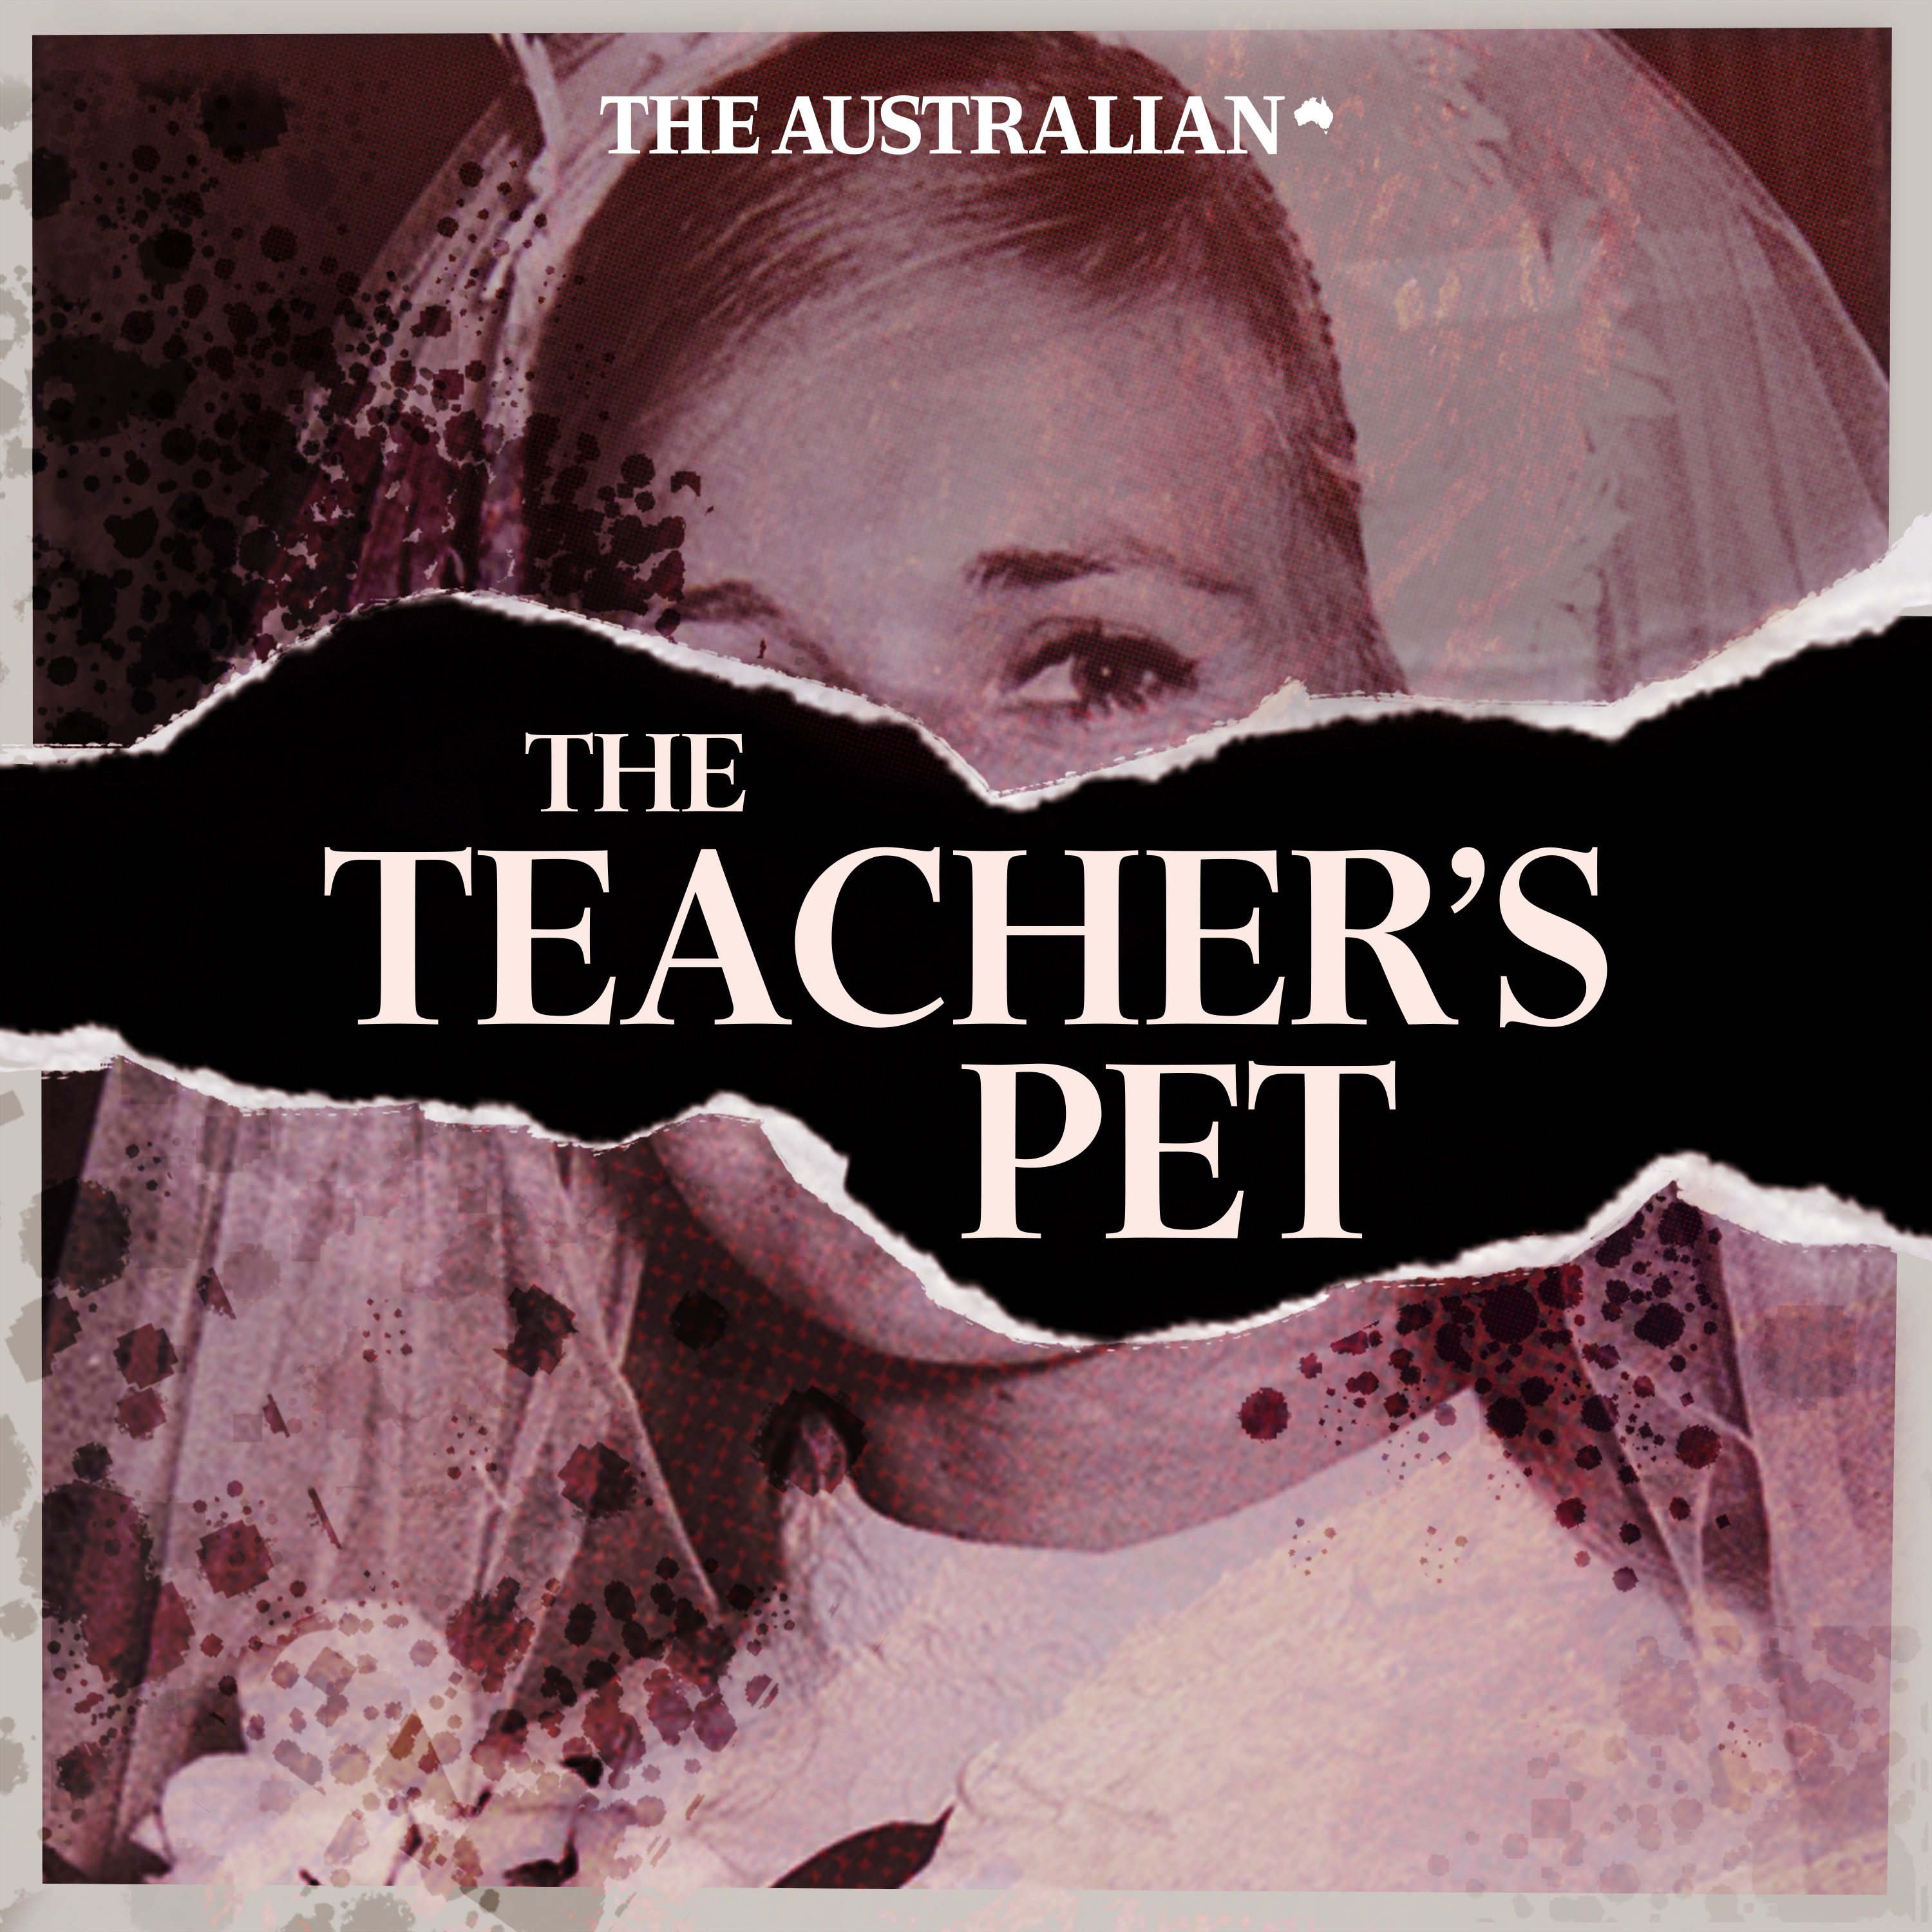 Bonus episode: Hedley reads Chapter 1 of his new book, The Teacher's Pet